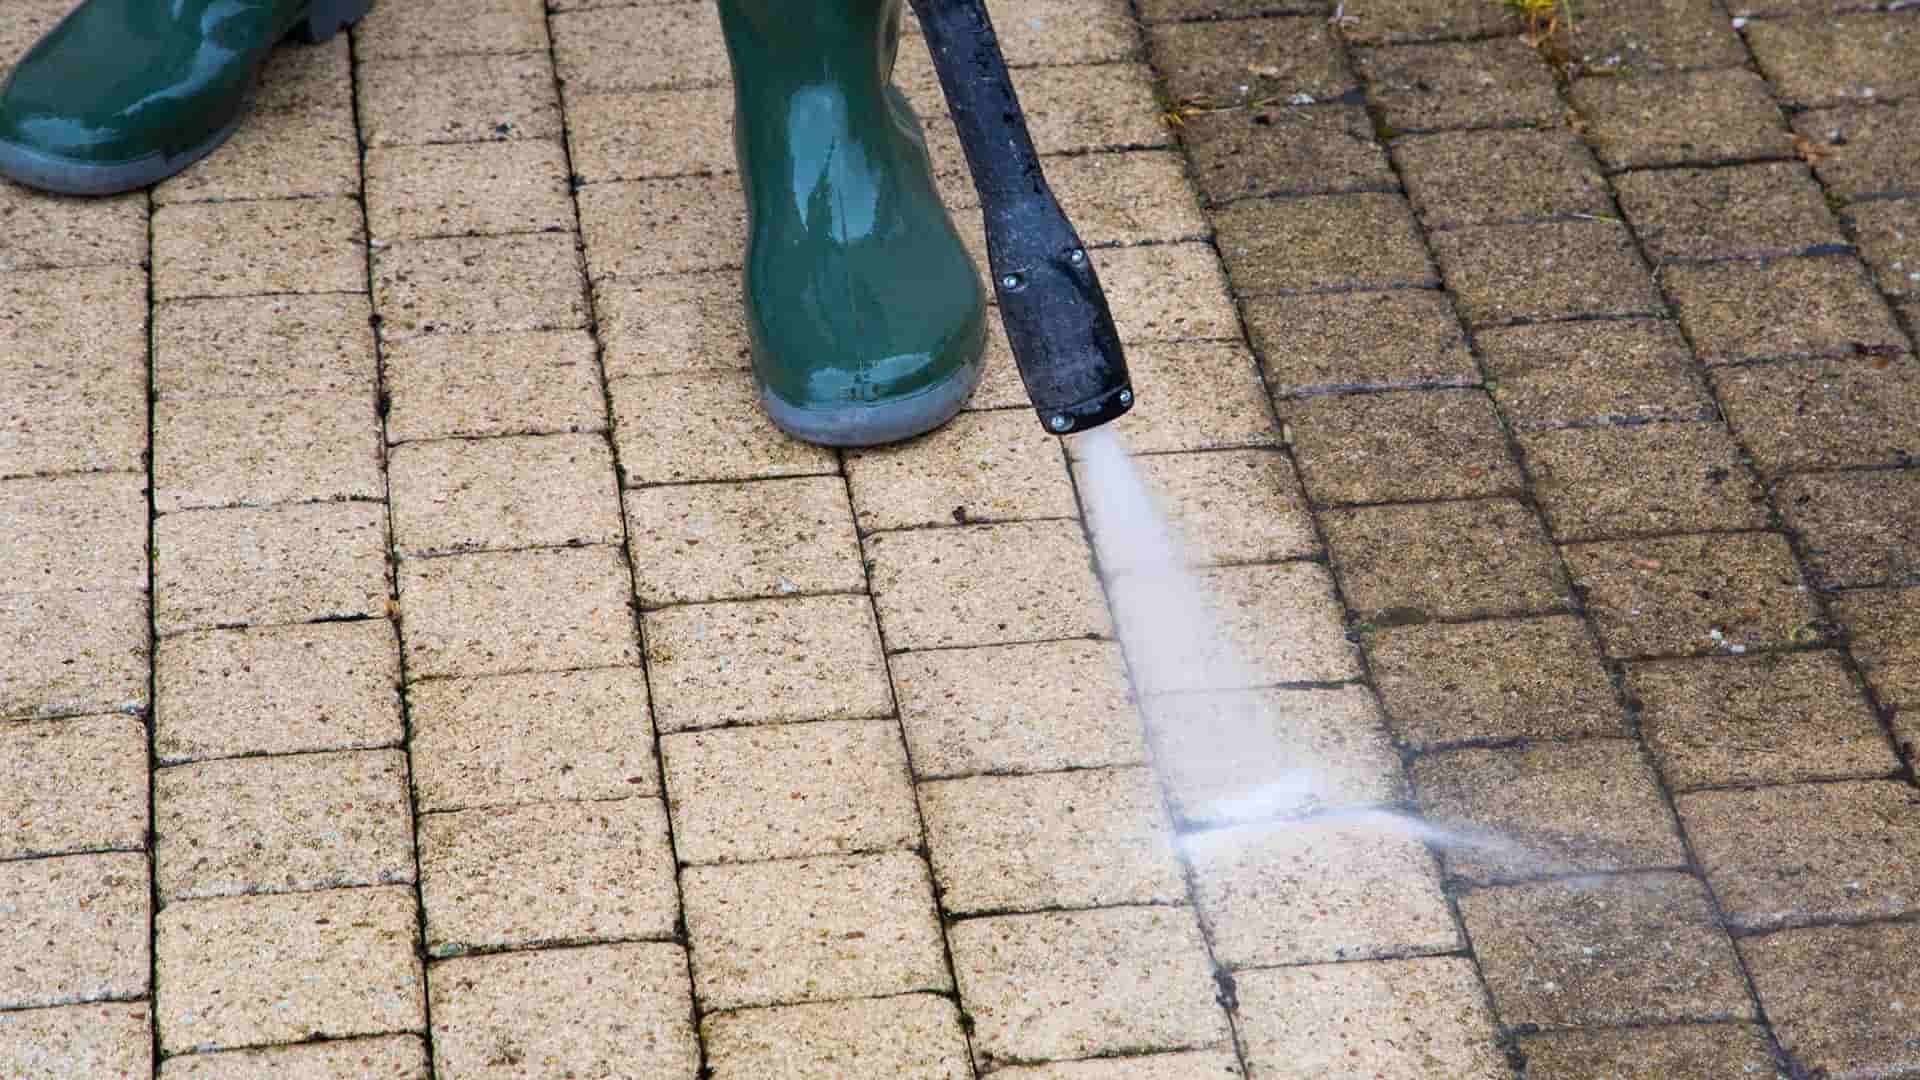 Sidewalk Pressure Washing Background Image